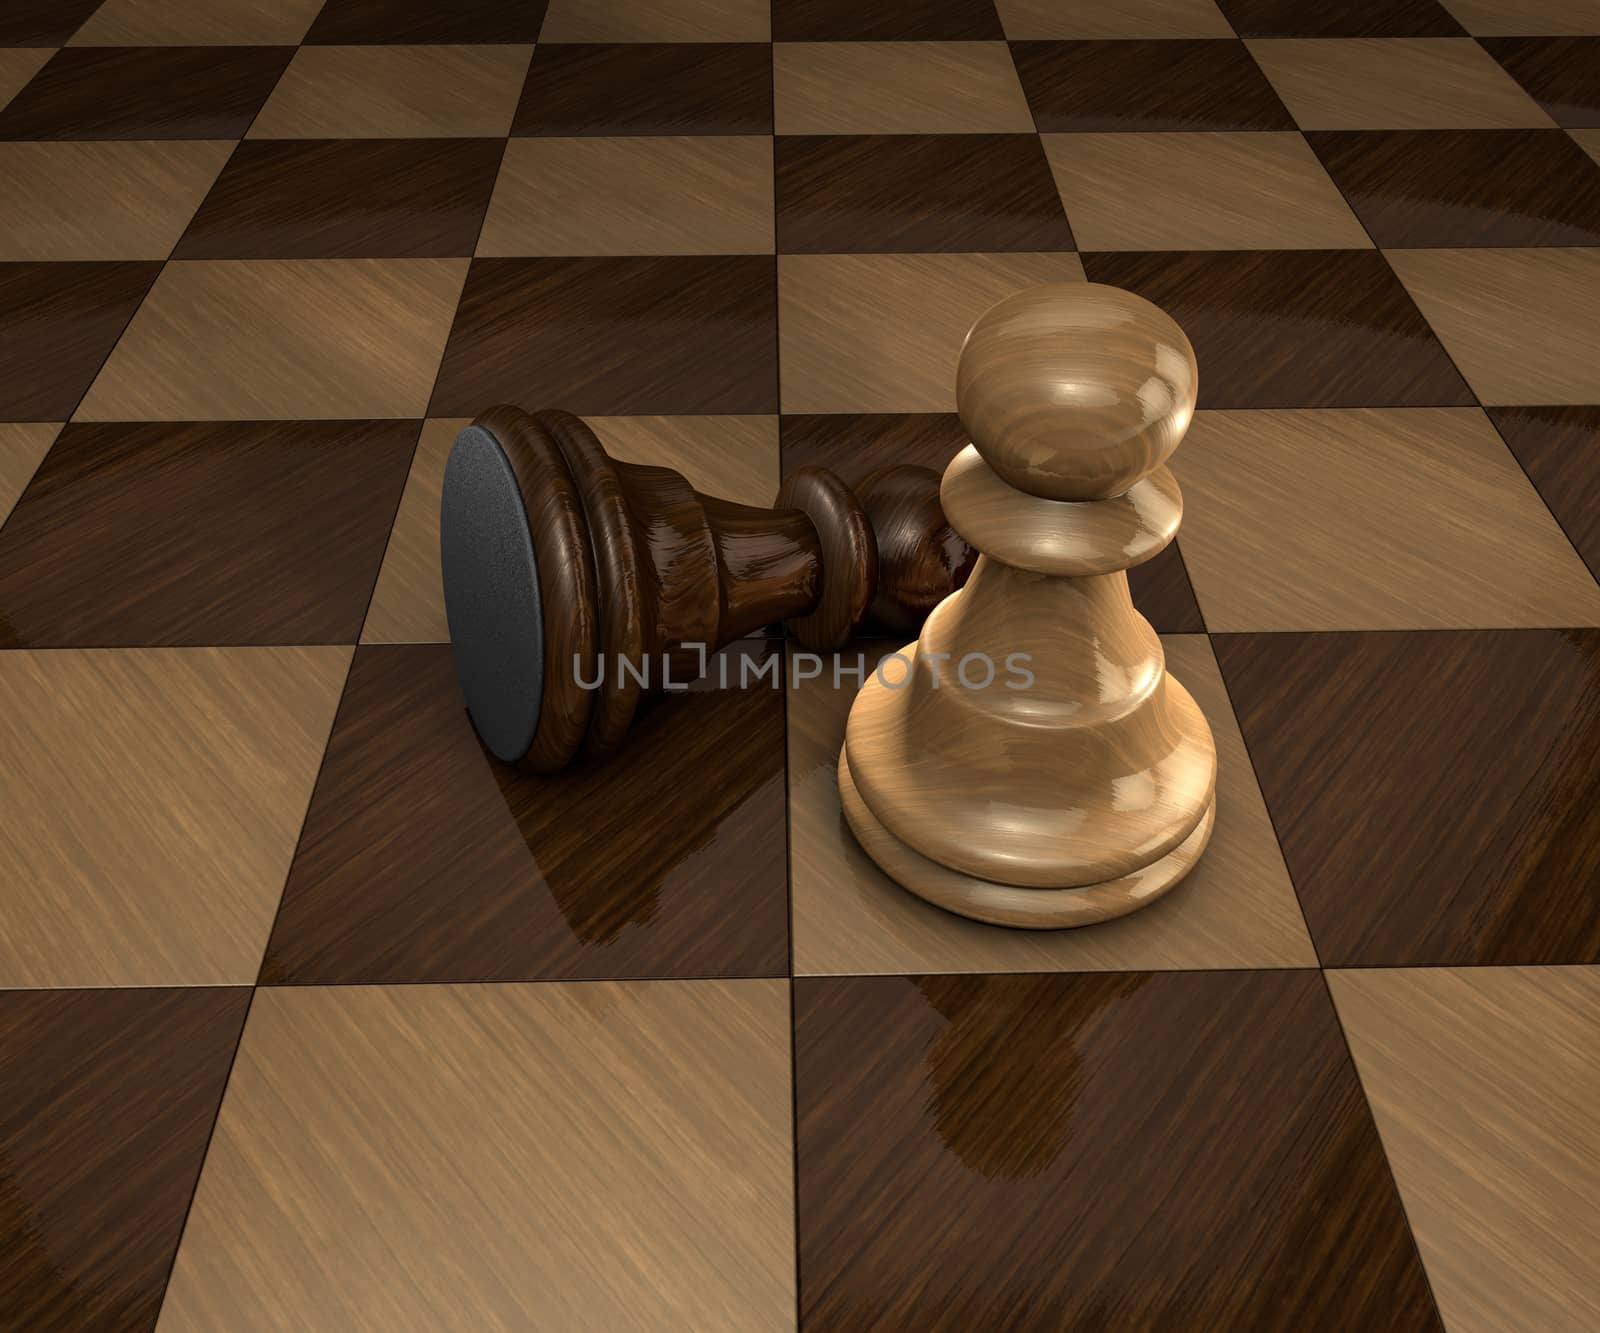 one fallen dark chess piece next to standing light chess piece on a checkered board